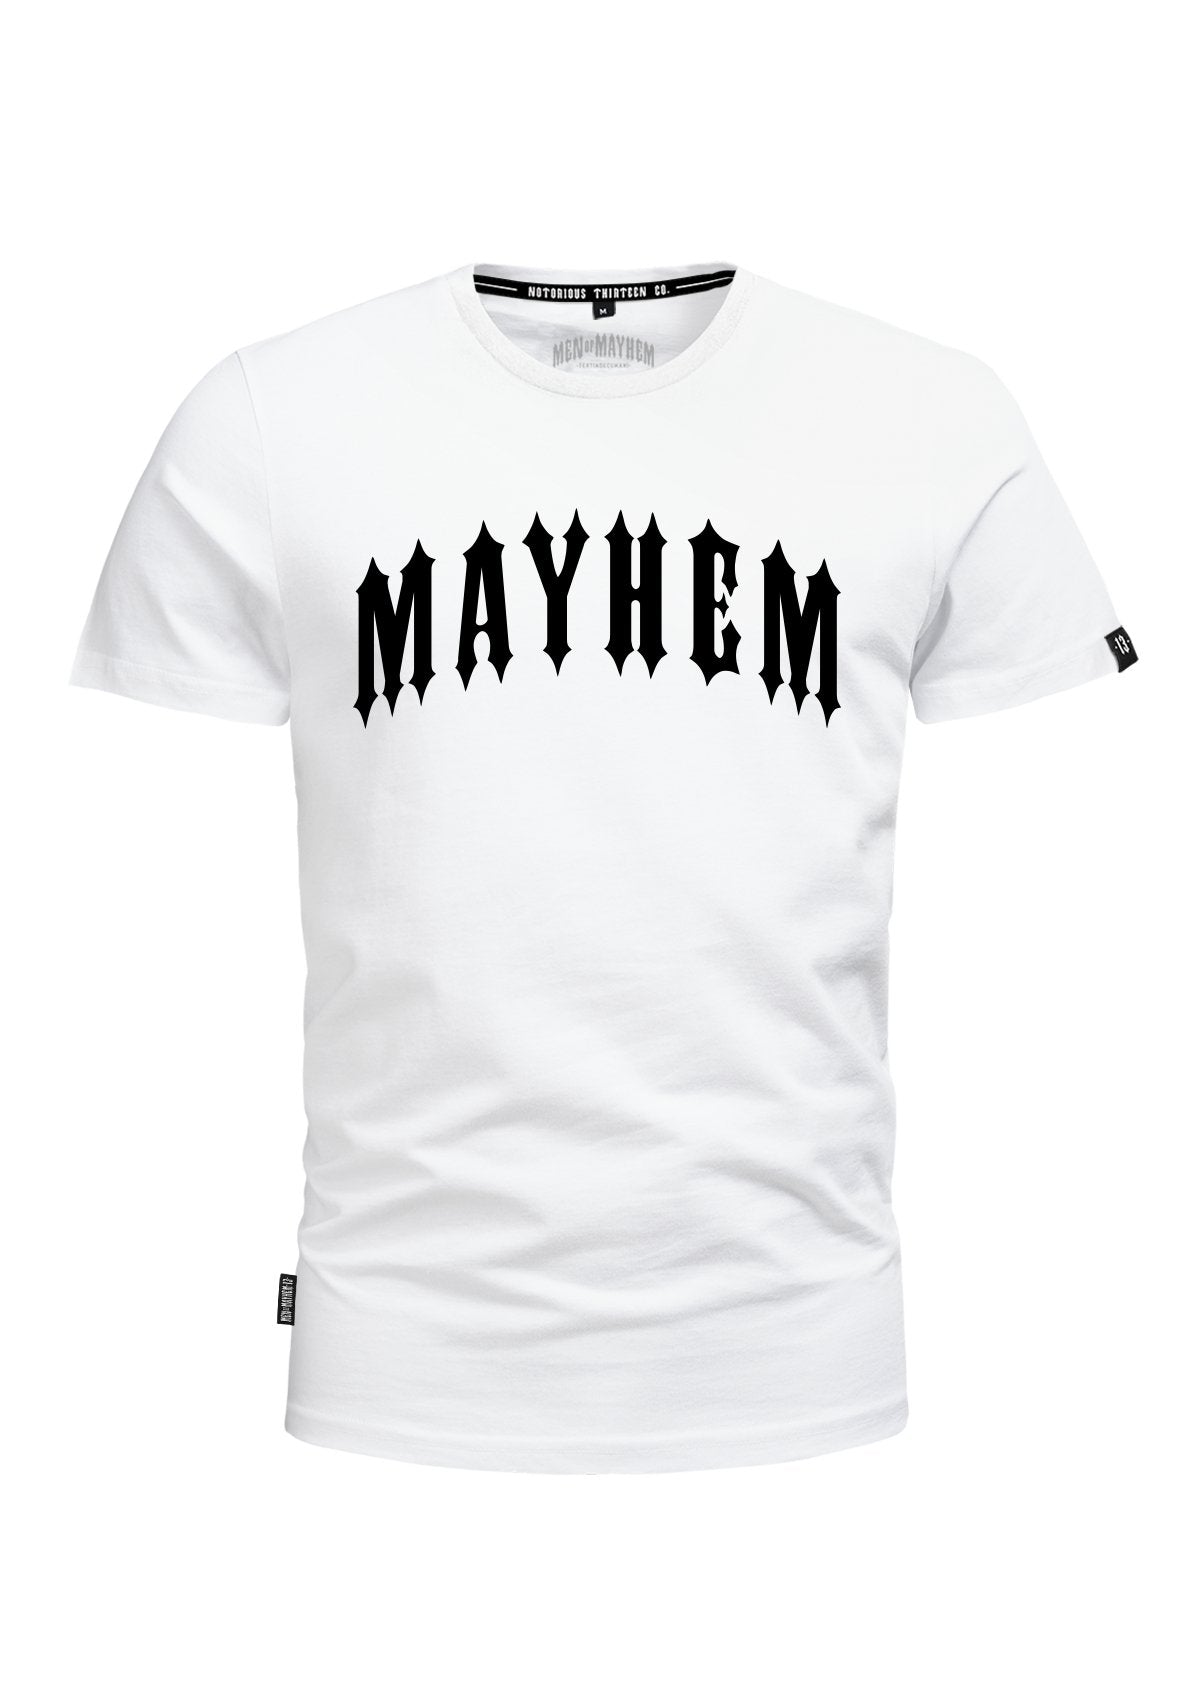 T-Shirt Mayhem XIII W/S - MEN OF MAYHEM - ALAIKO-EXCHANGES-MM-M-1010-TMX-WS - Men - T-Shirts